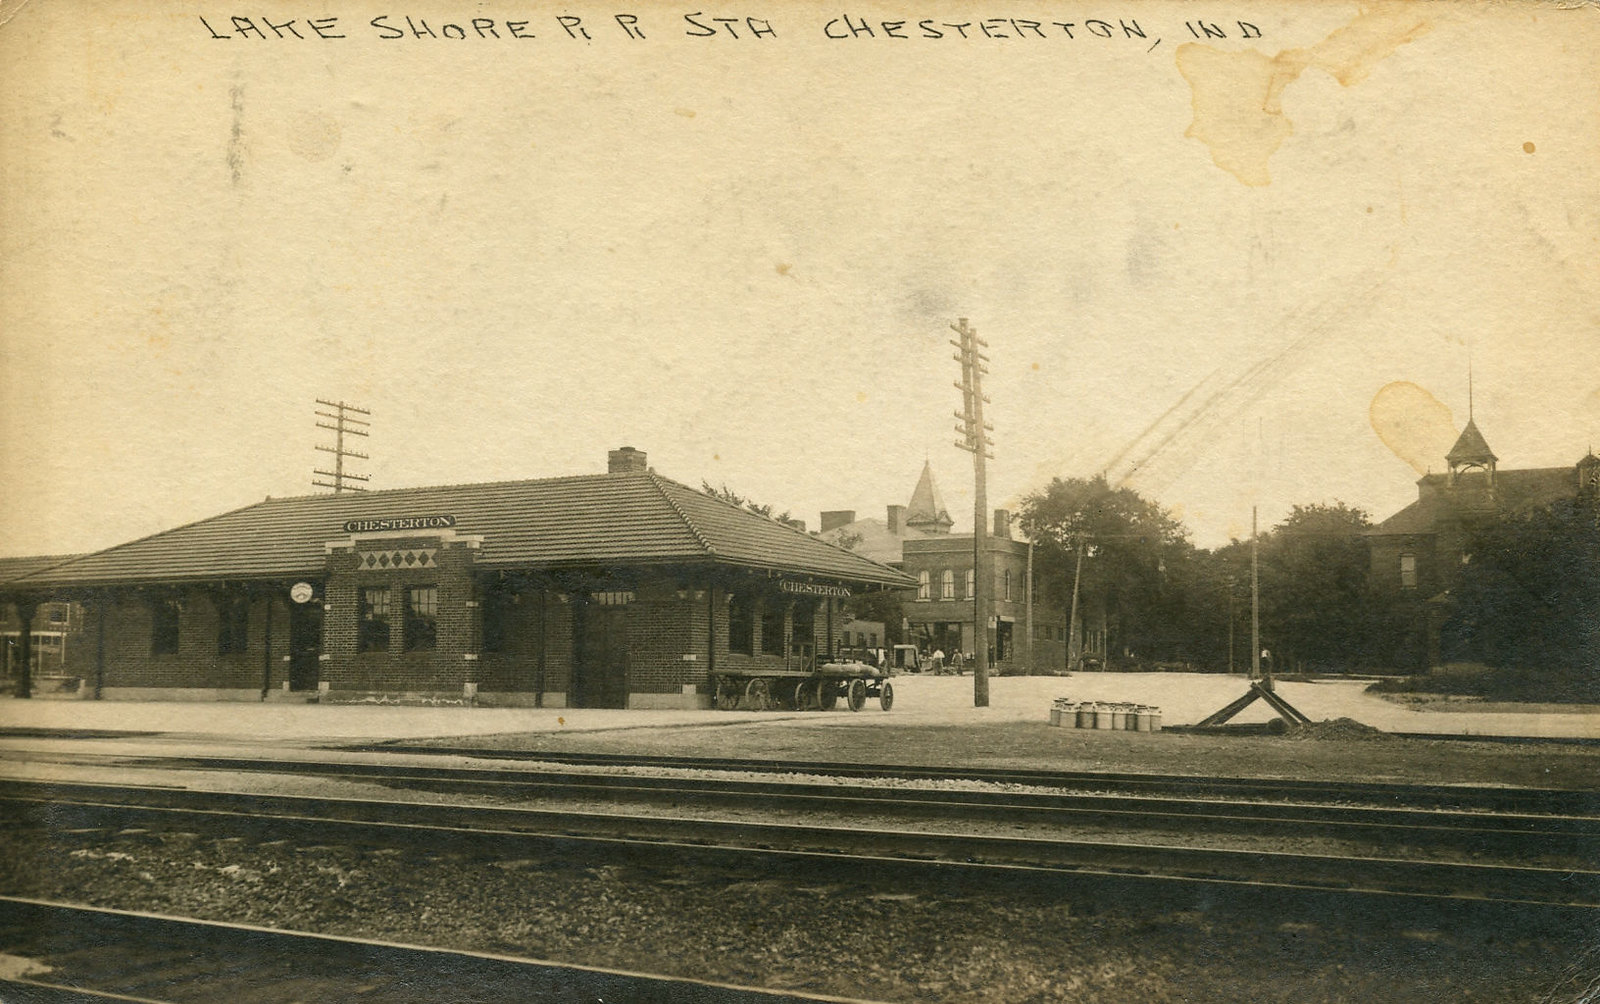 Lake Shore Railroad Station, circa 1915 - Chesterton, Indiana